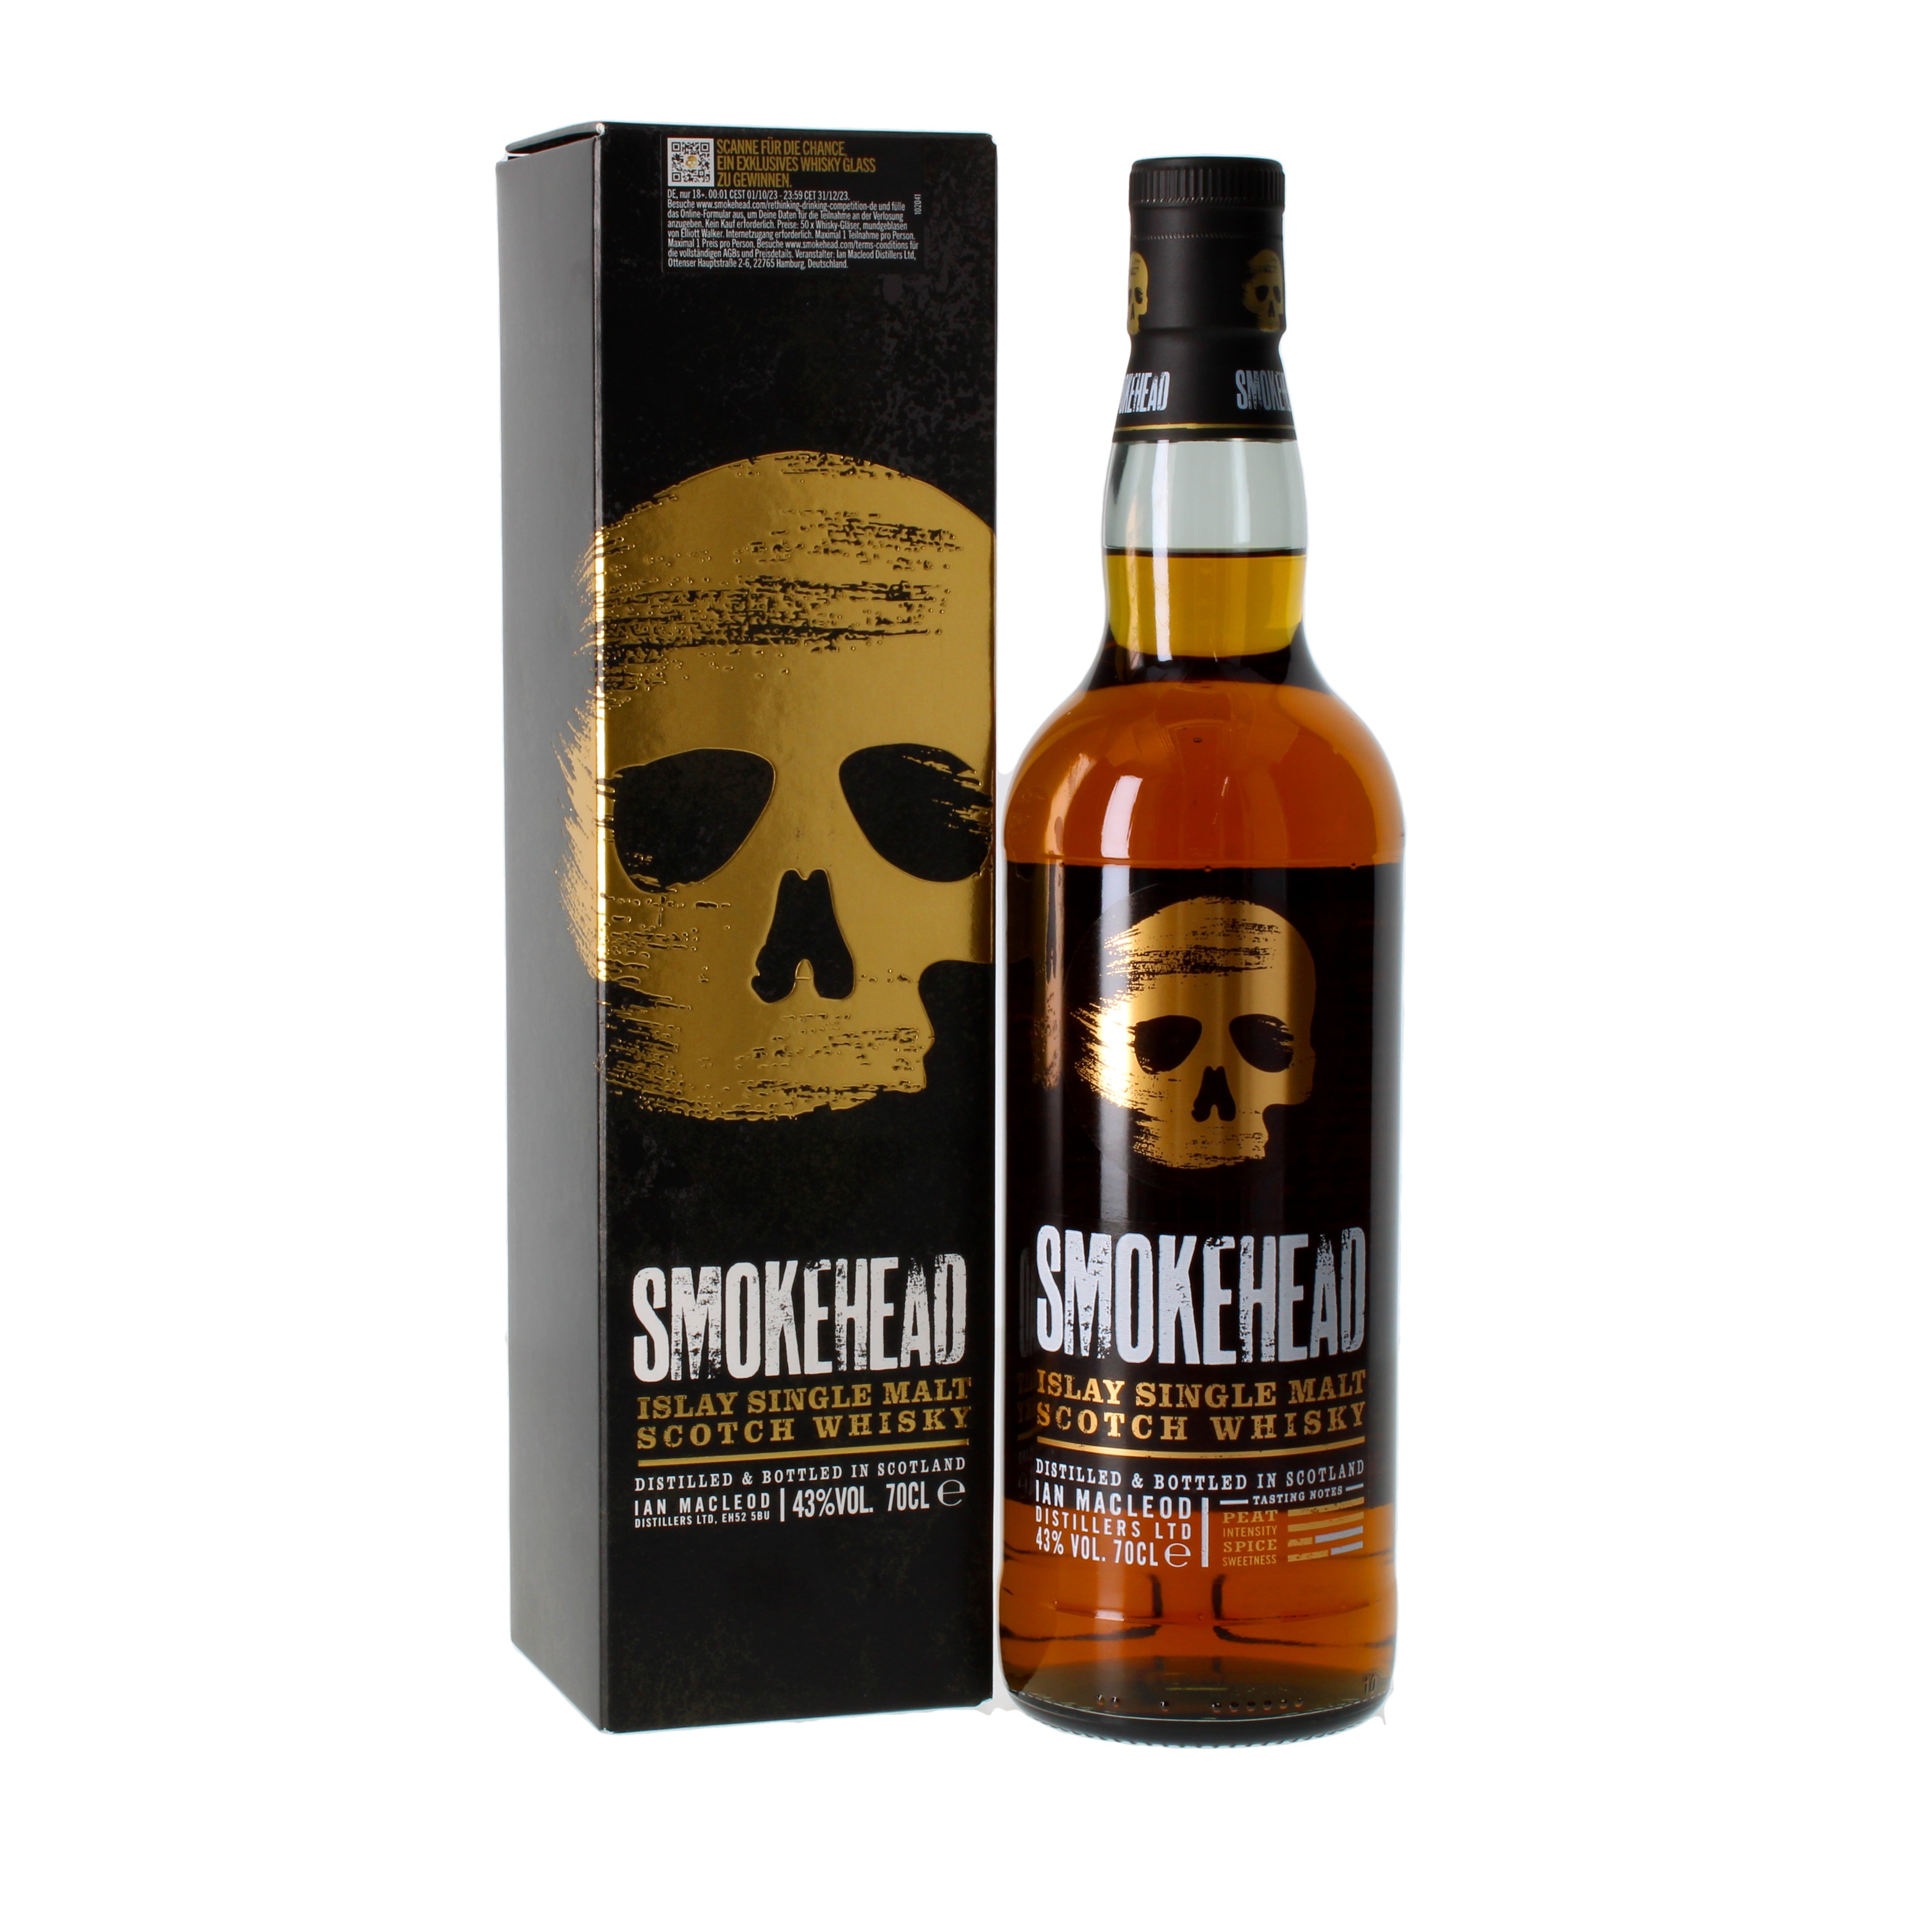 Smokehead Islay Single Malt Scotch Whiskey 0.7l, alc. 43% by volume